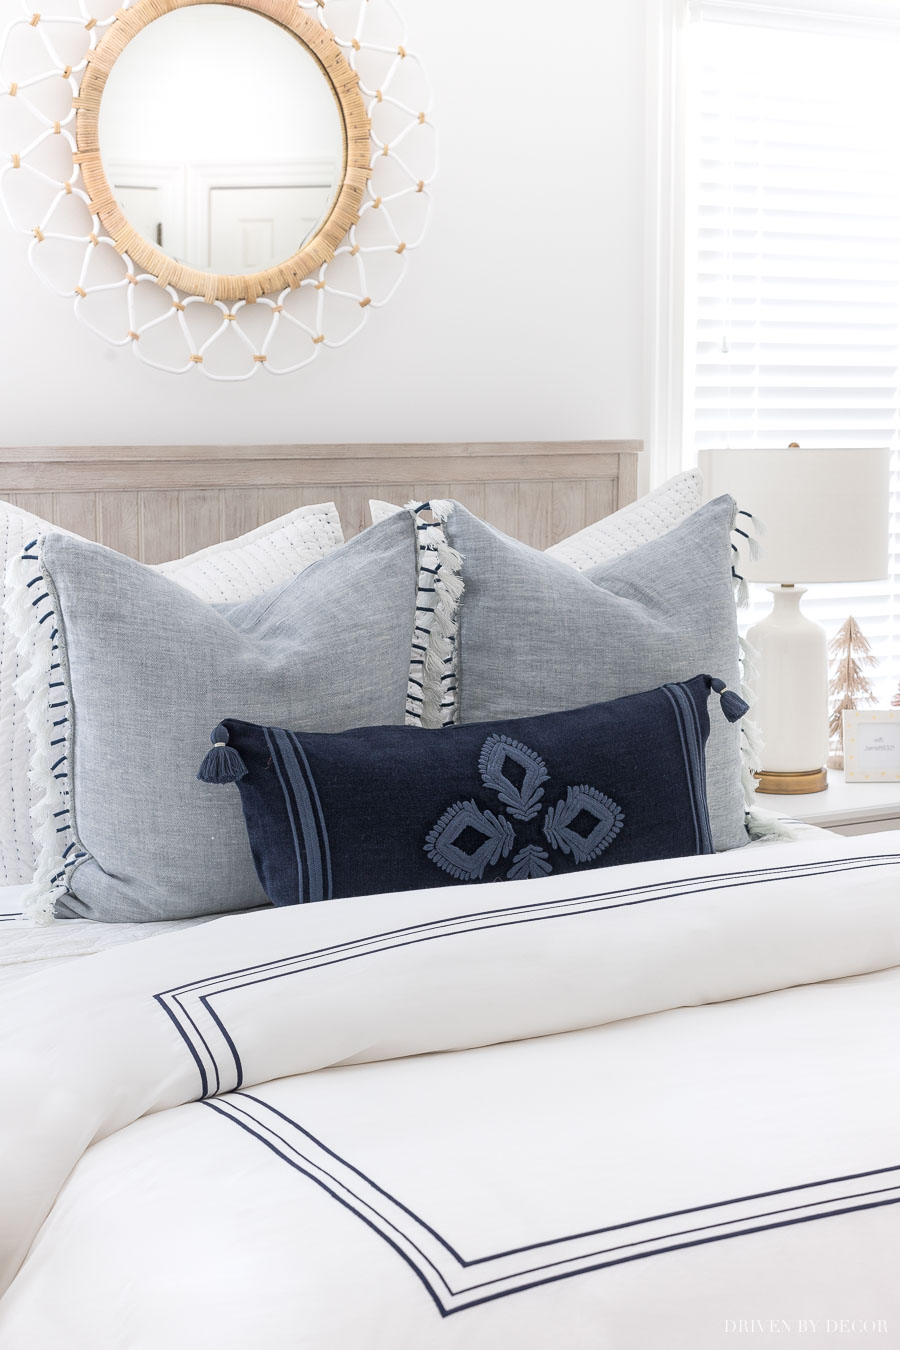 https://www.drivenbydecor.com/wp-content/uploads/2019/11/blue-white-decorative-pillow-covers-bed.jpg